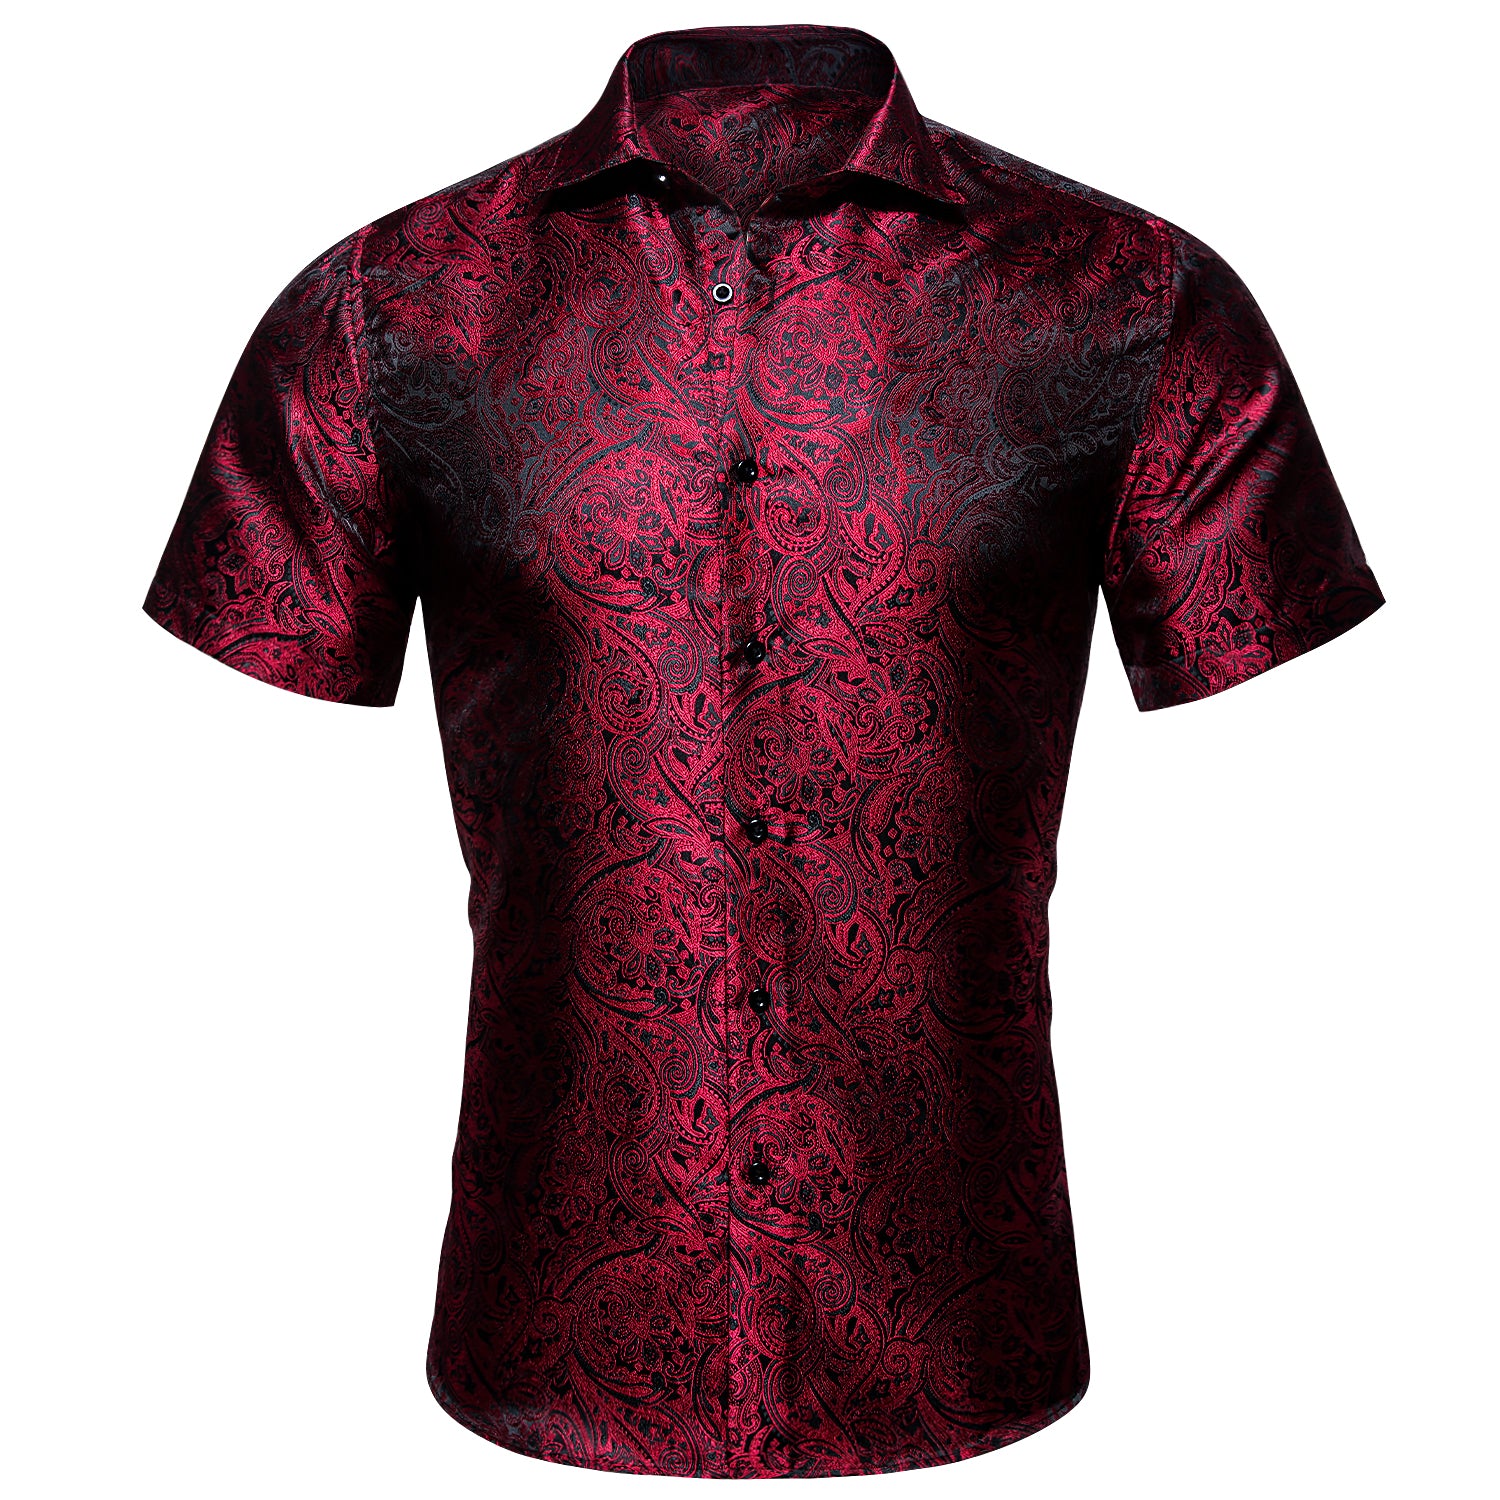 Barry.wang New Red Black Paisley Silk Short Sleeve Daily Slim Fit Men's Shirt